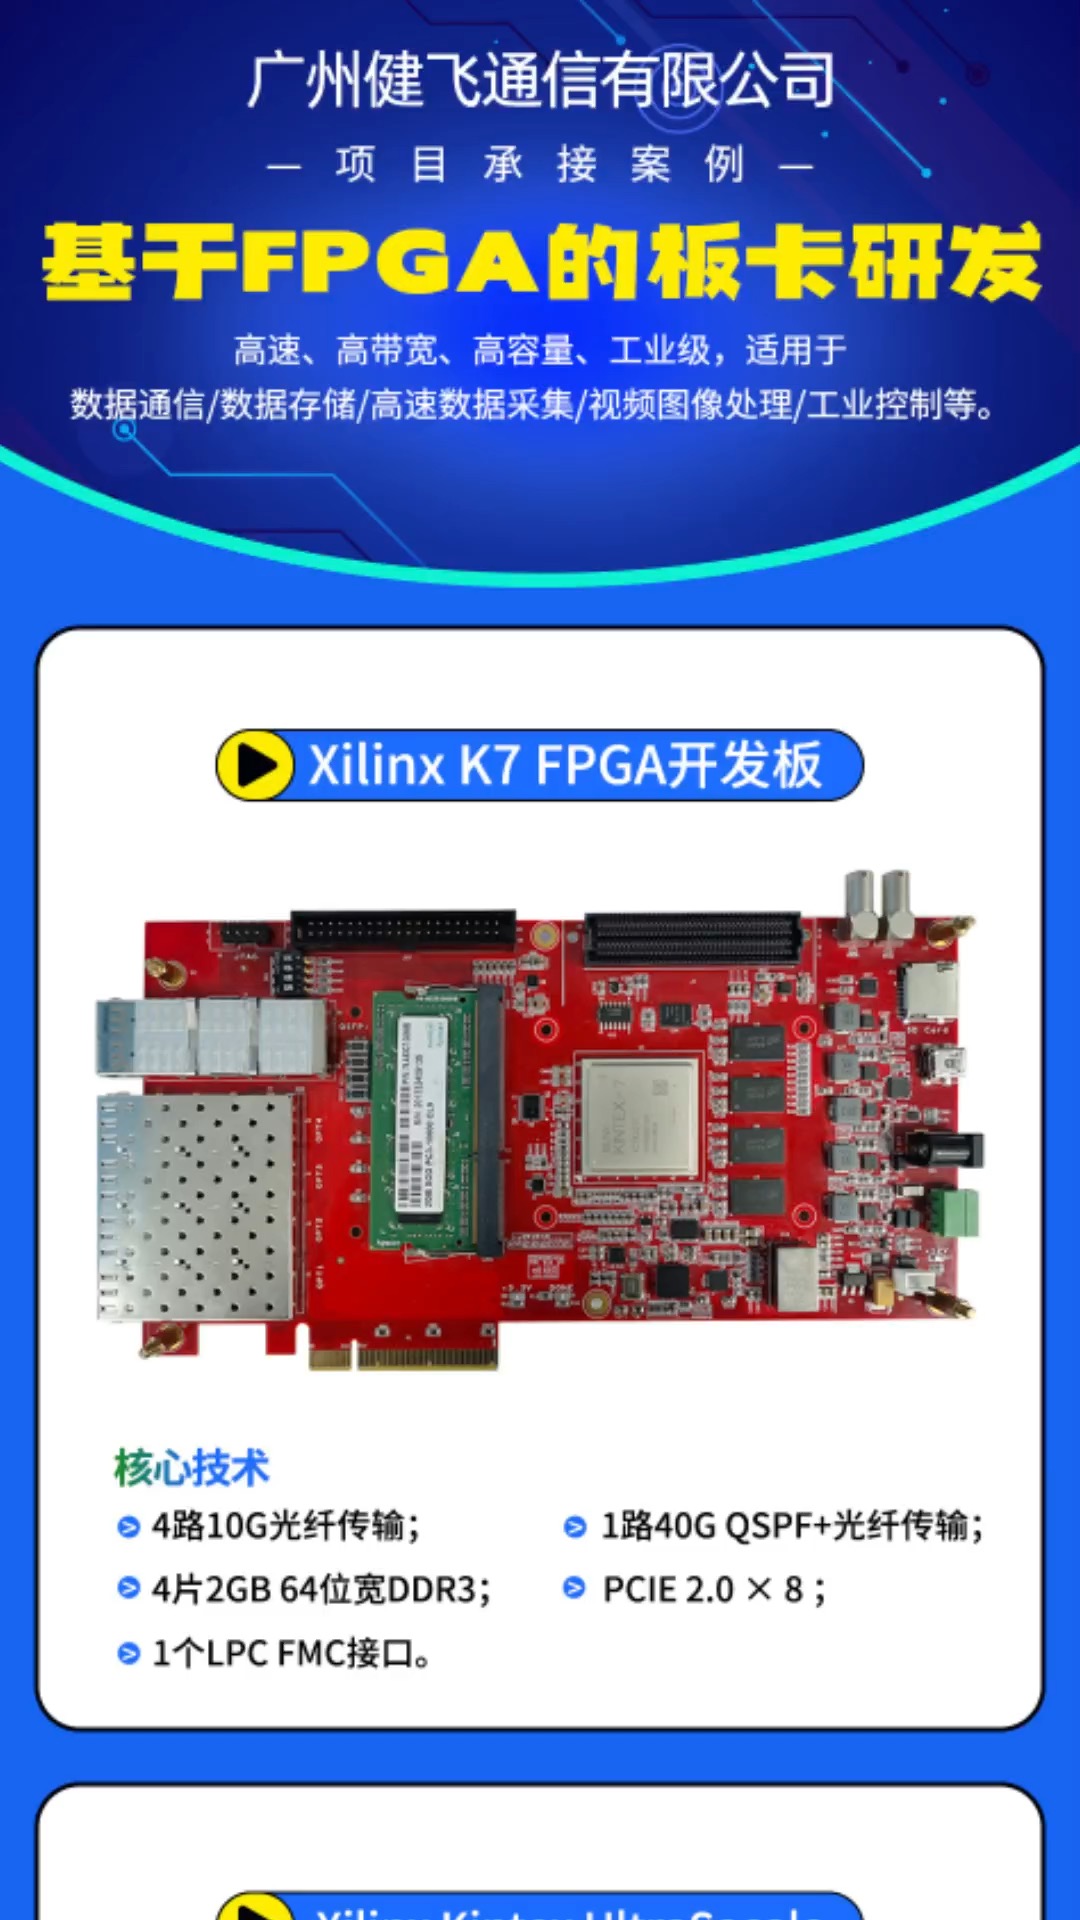 #fpga 

基于FPGA的板卡研發：高速、高帶寬、高容量、工業級。
適用于高于數據通信/數據存儲/高速數據